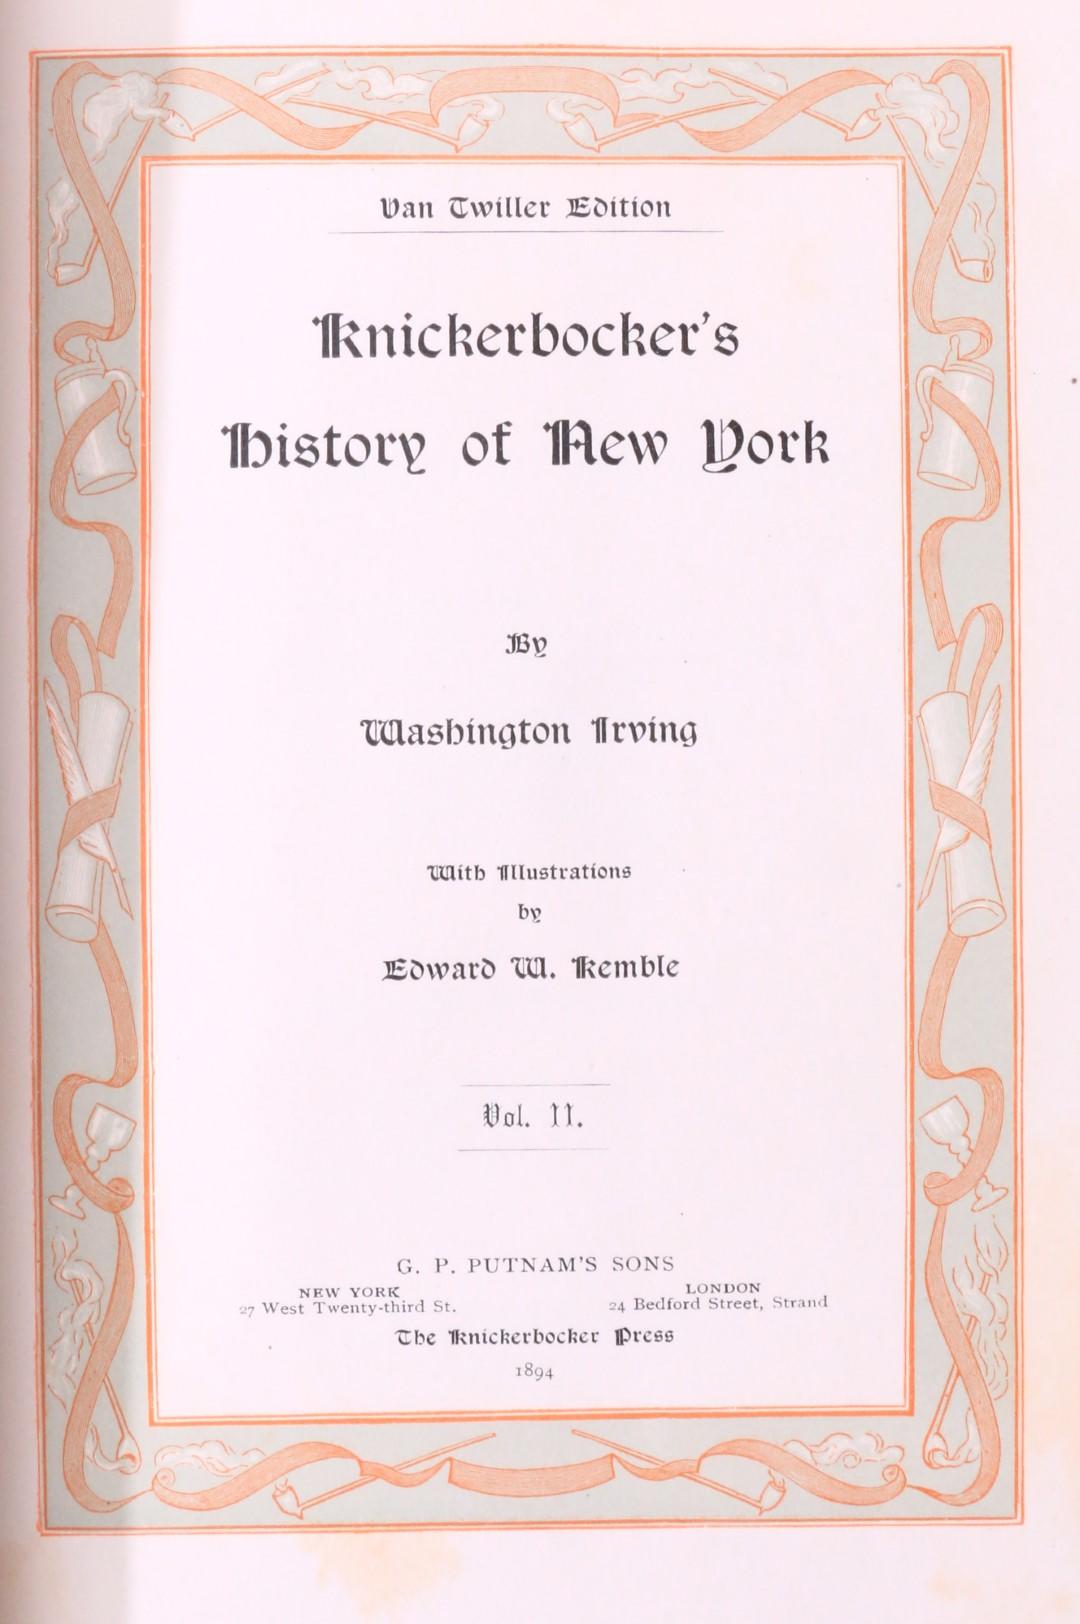 Washington Irving - Knickerbocker's History of New York: Van Twiller Edition - G.P. Putnam's, 1894, First Edition.